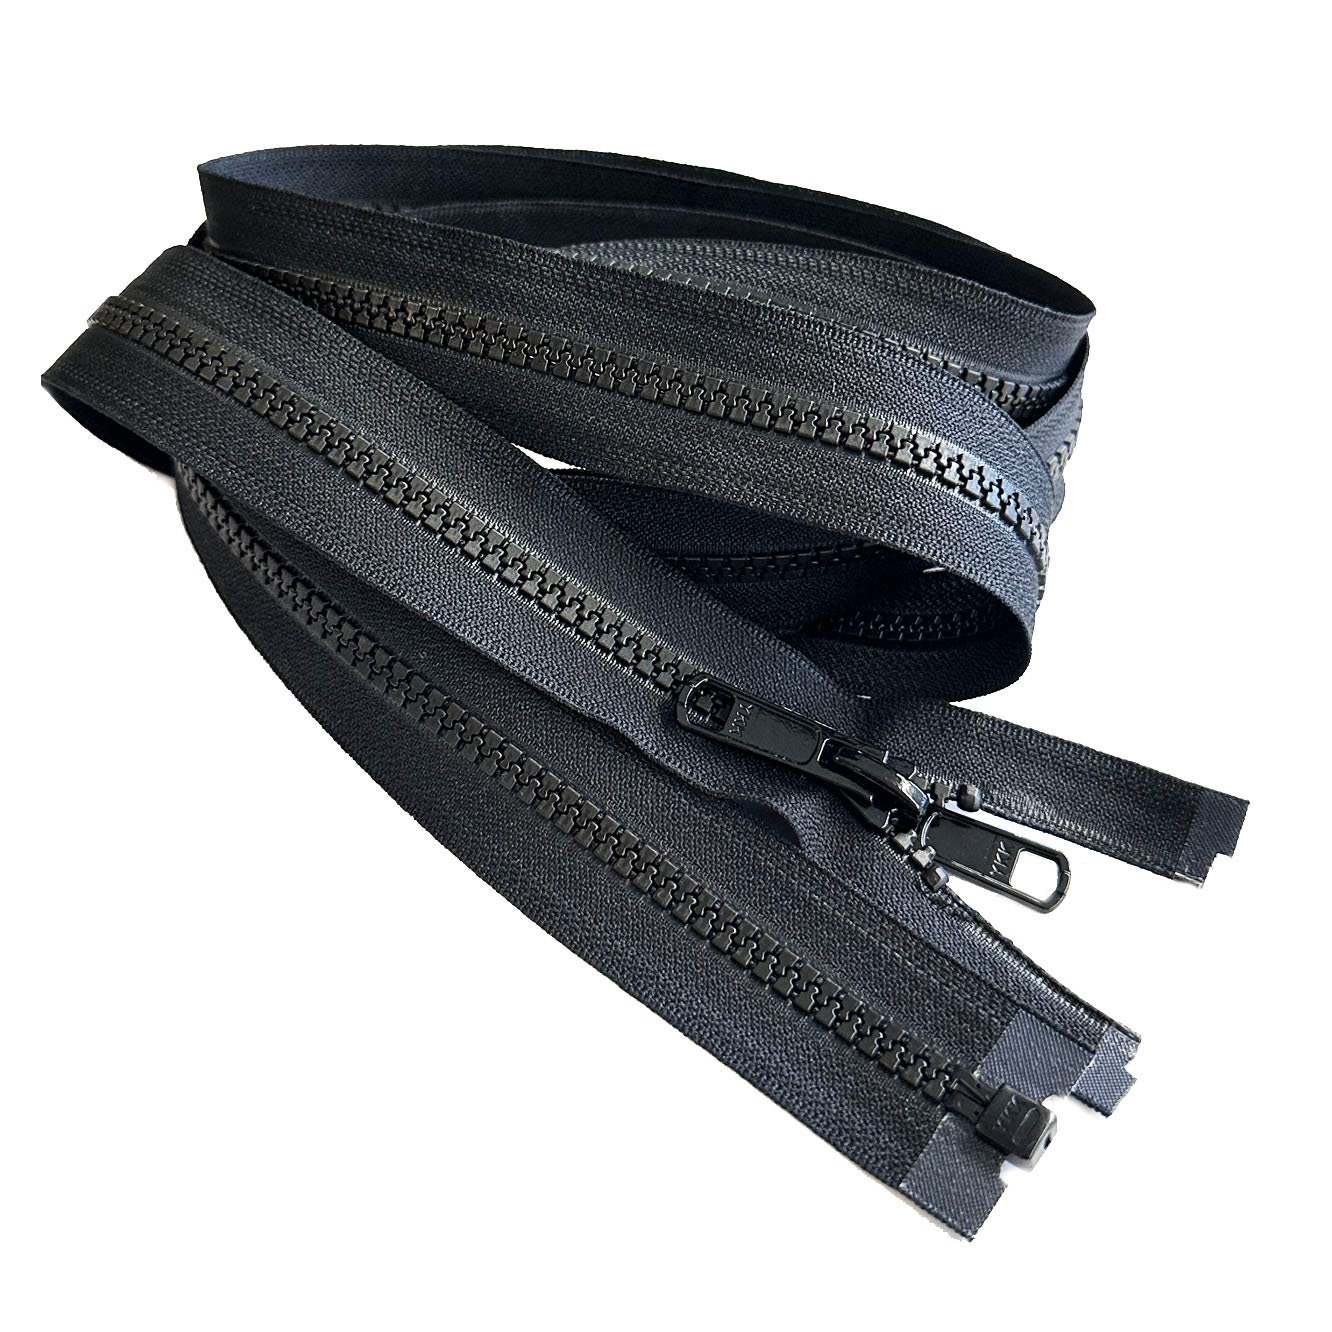 YKK #10 20 Molded Plastic Two-Way Jacket Zipper - Black (580)